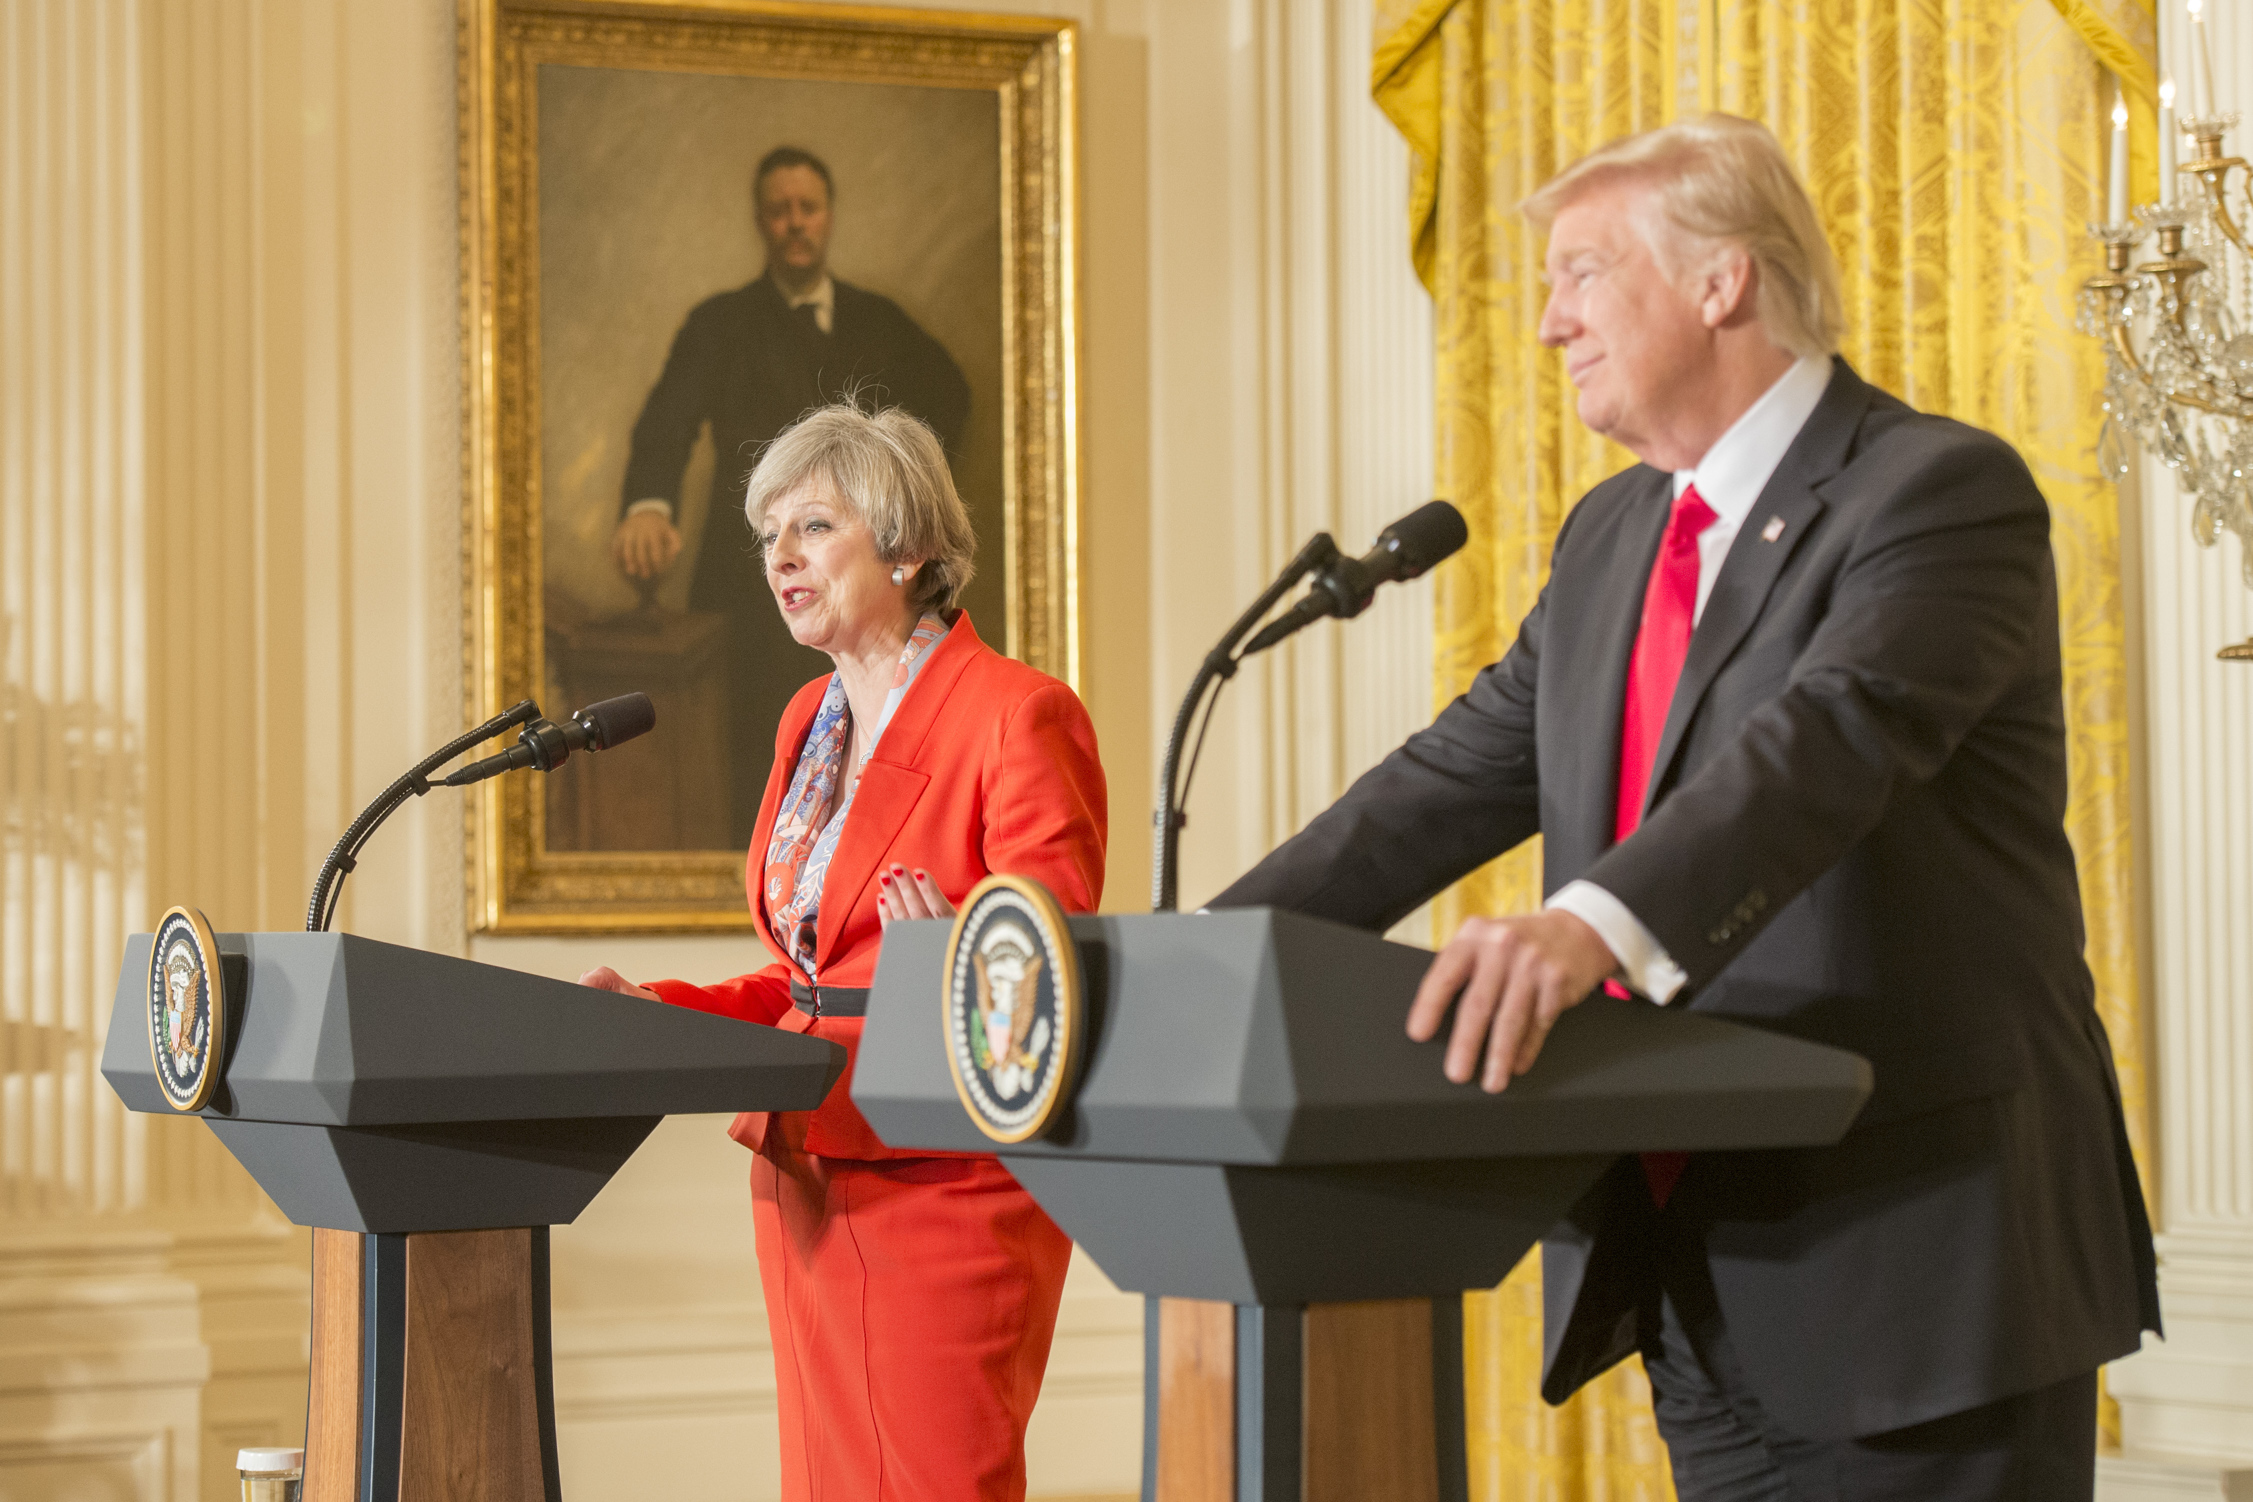 Prime Minister Theresa May and Donald Trump